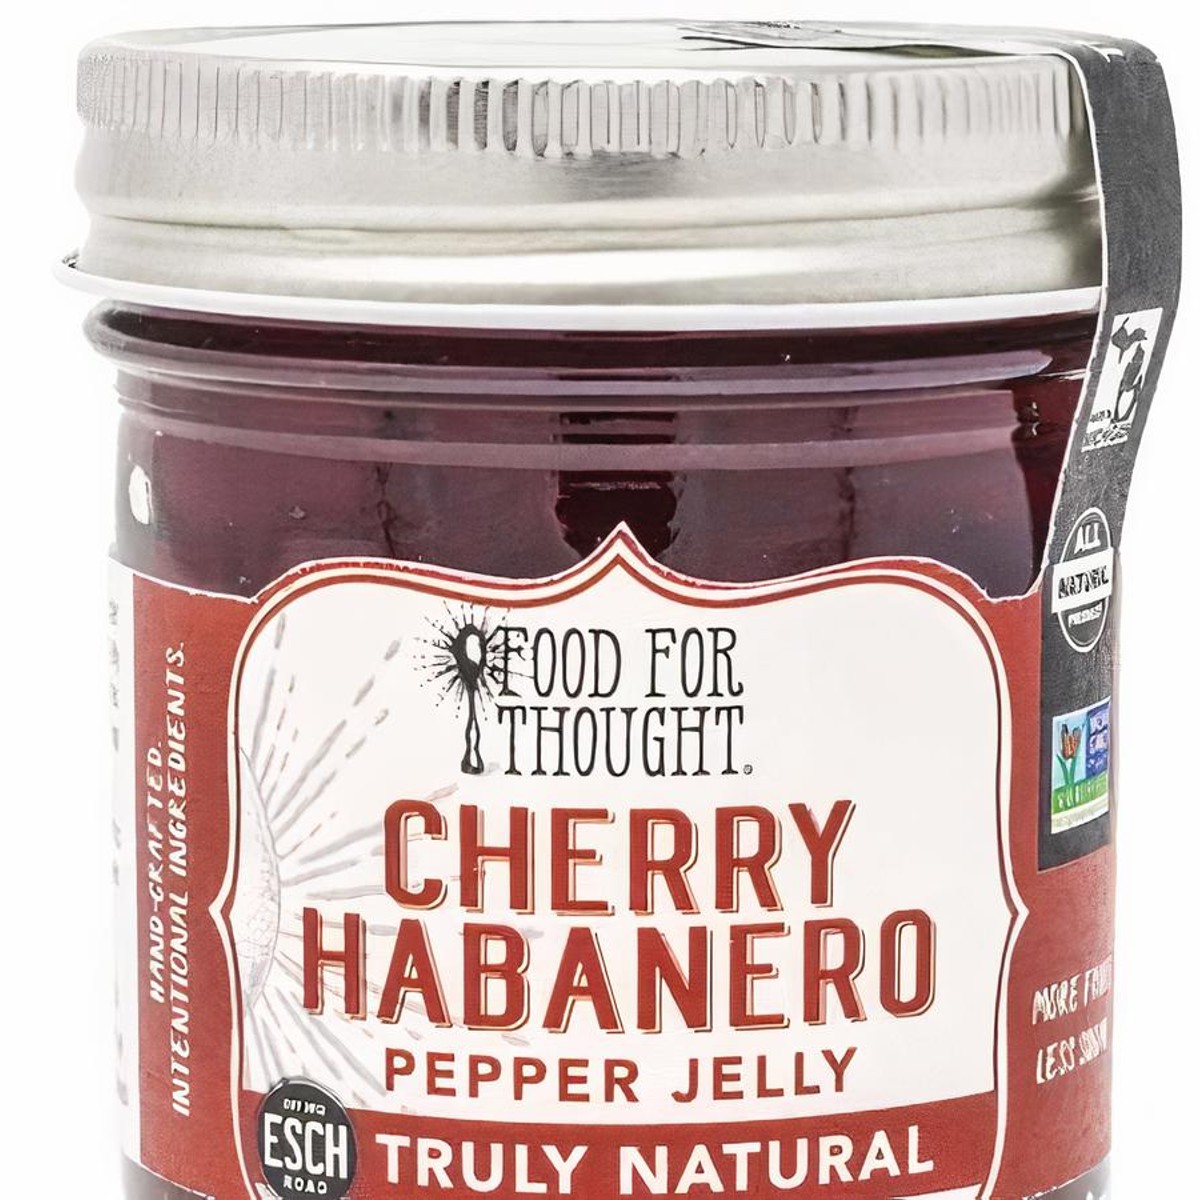 Black Cherry & Grape Habanero Texas Pepper Jelly Rib Candy 